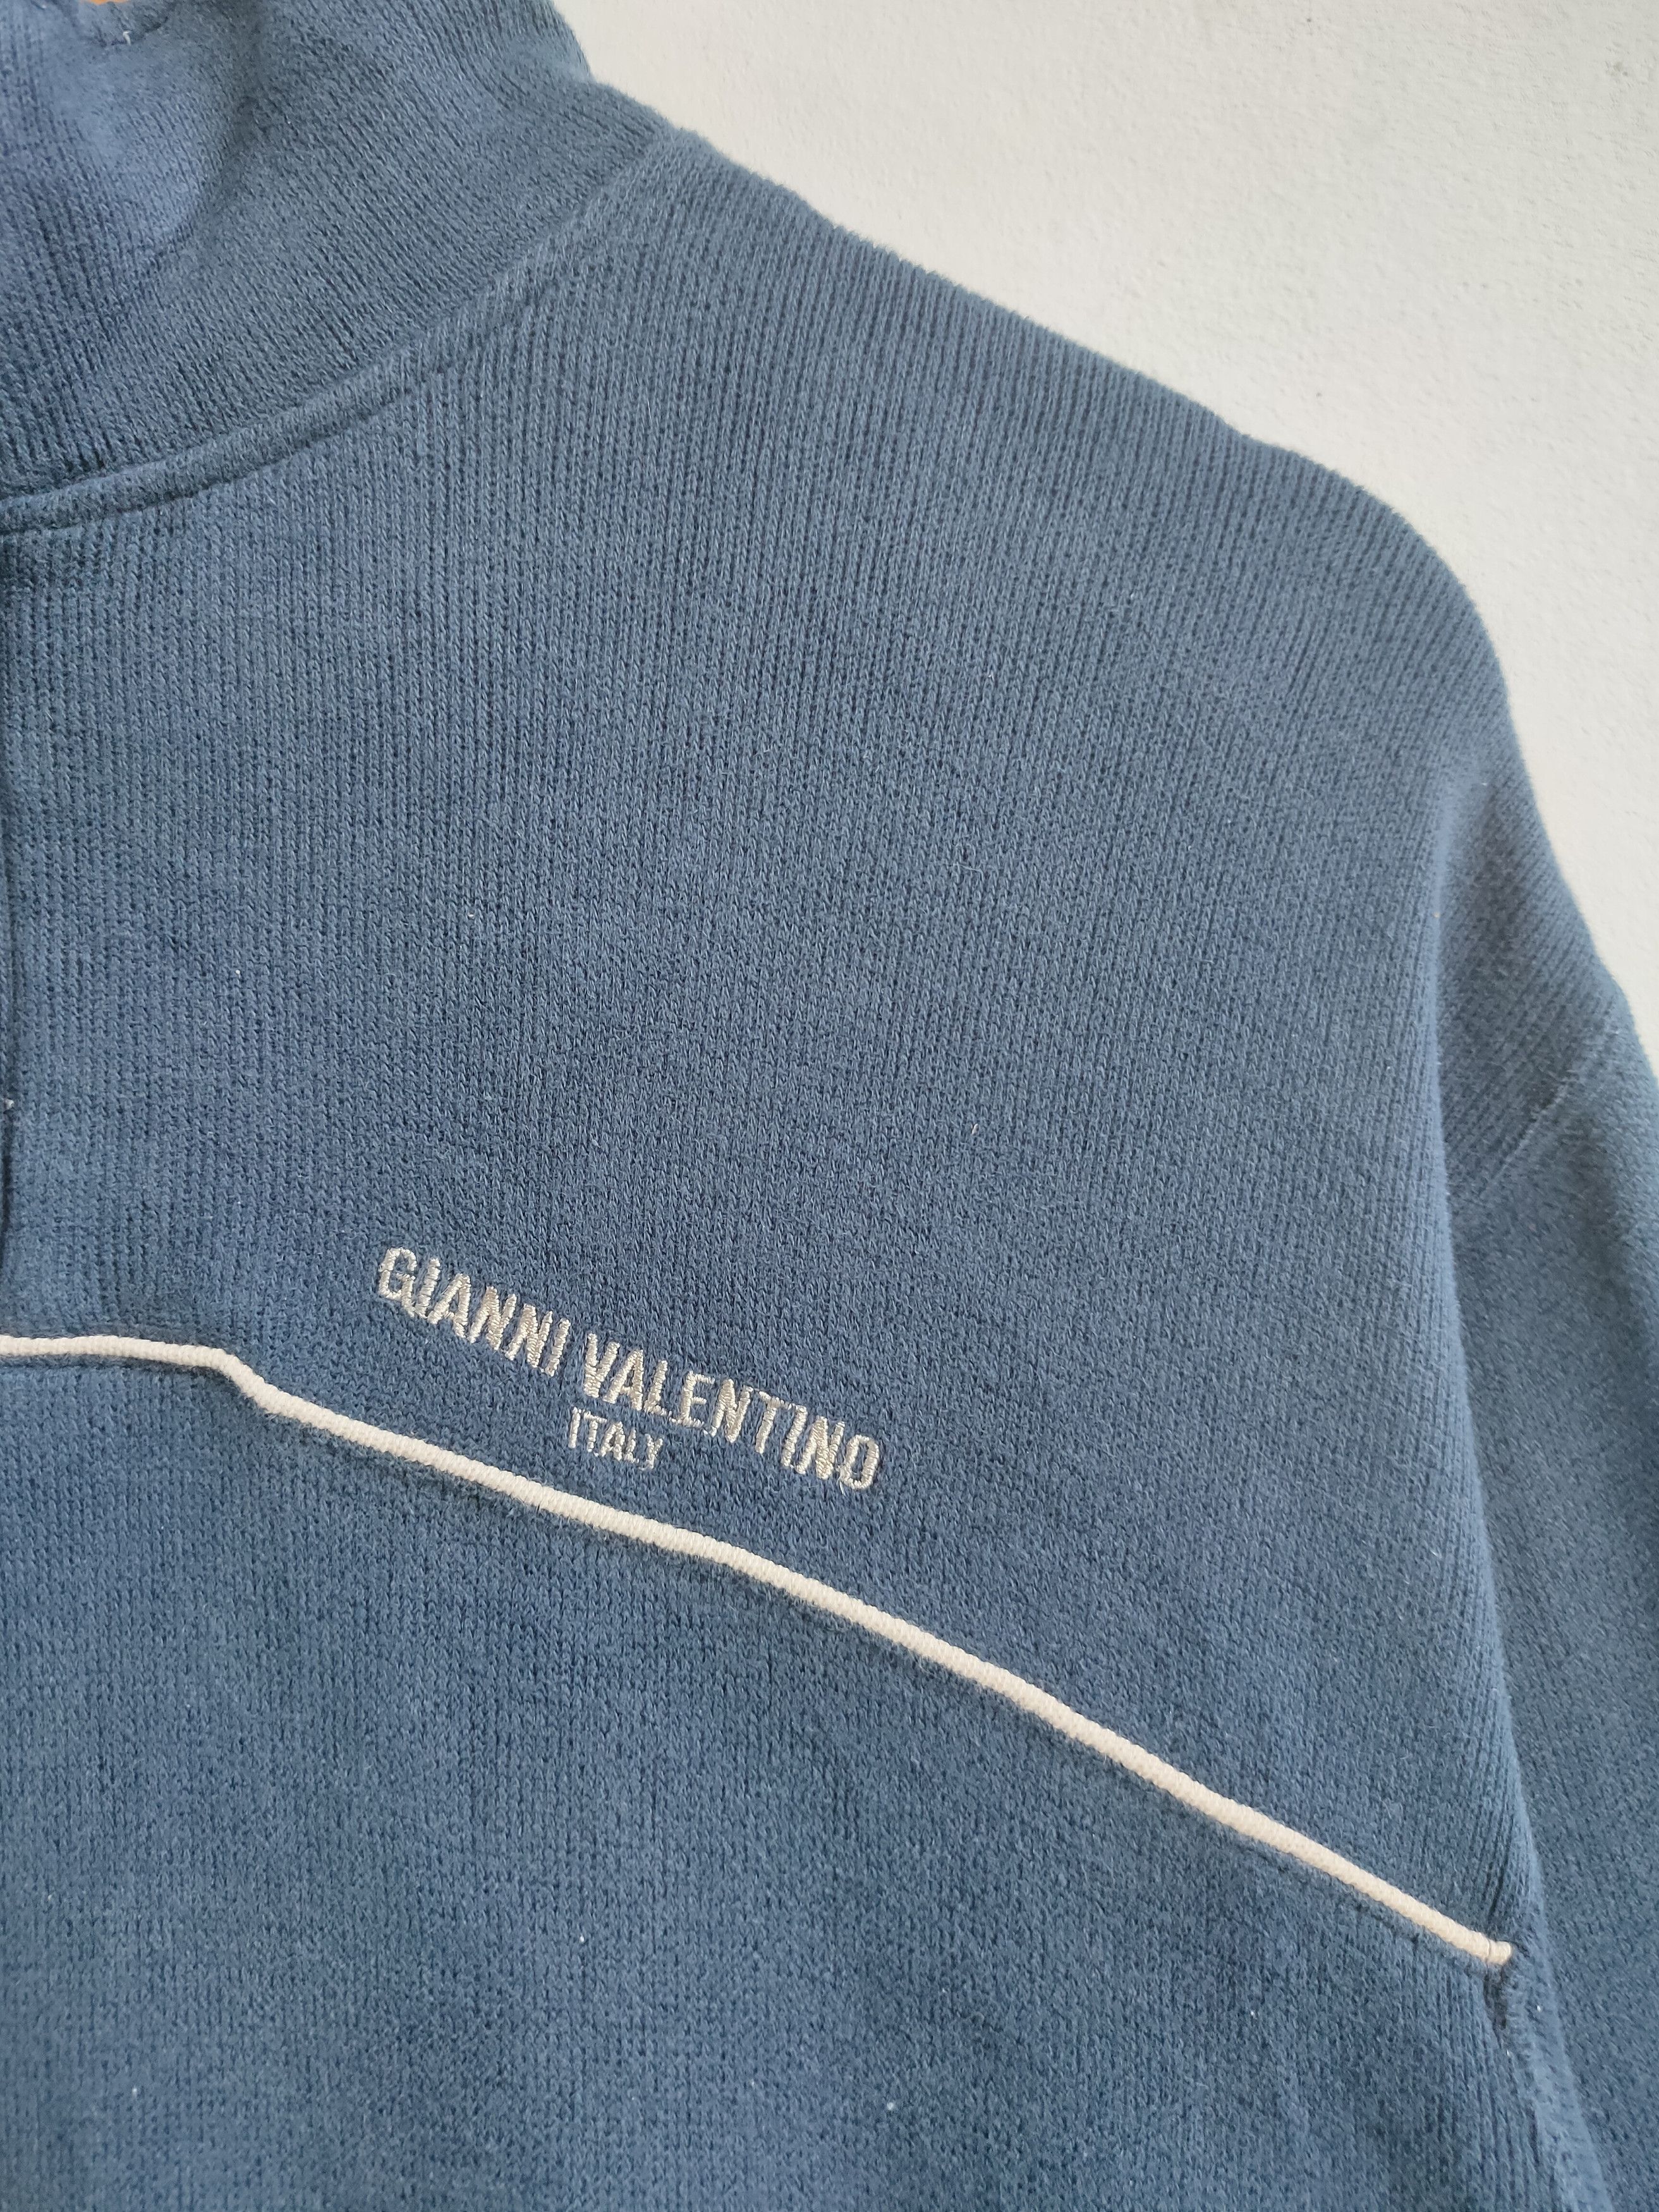 Vintage RARE! Vintage Sweatshirt Gianni Valentino Italy Pullover Size US M / EU 48-50 / 2 - 3 Thumbnail